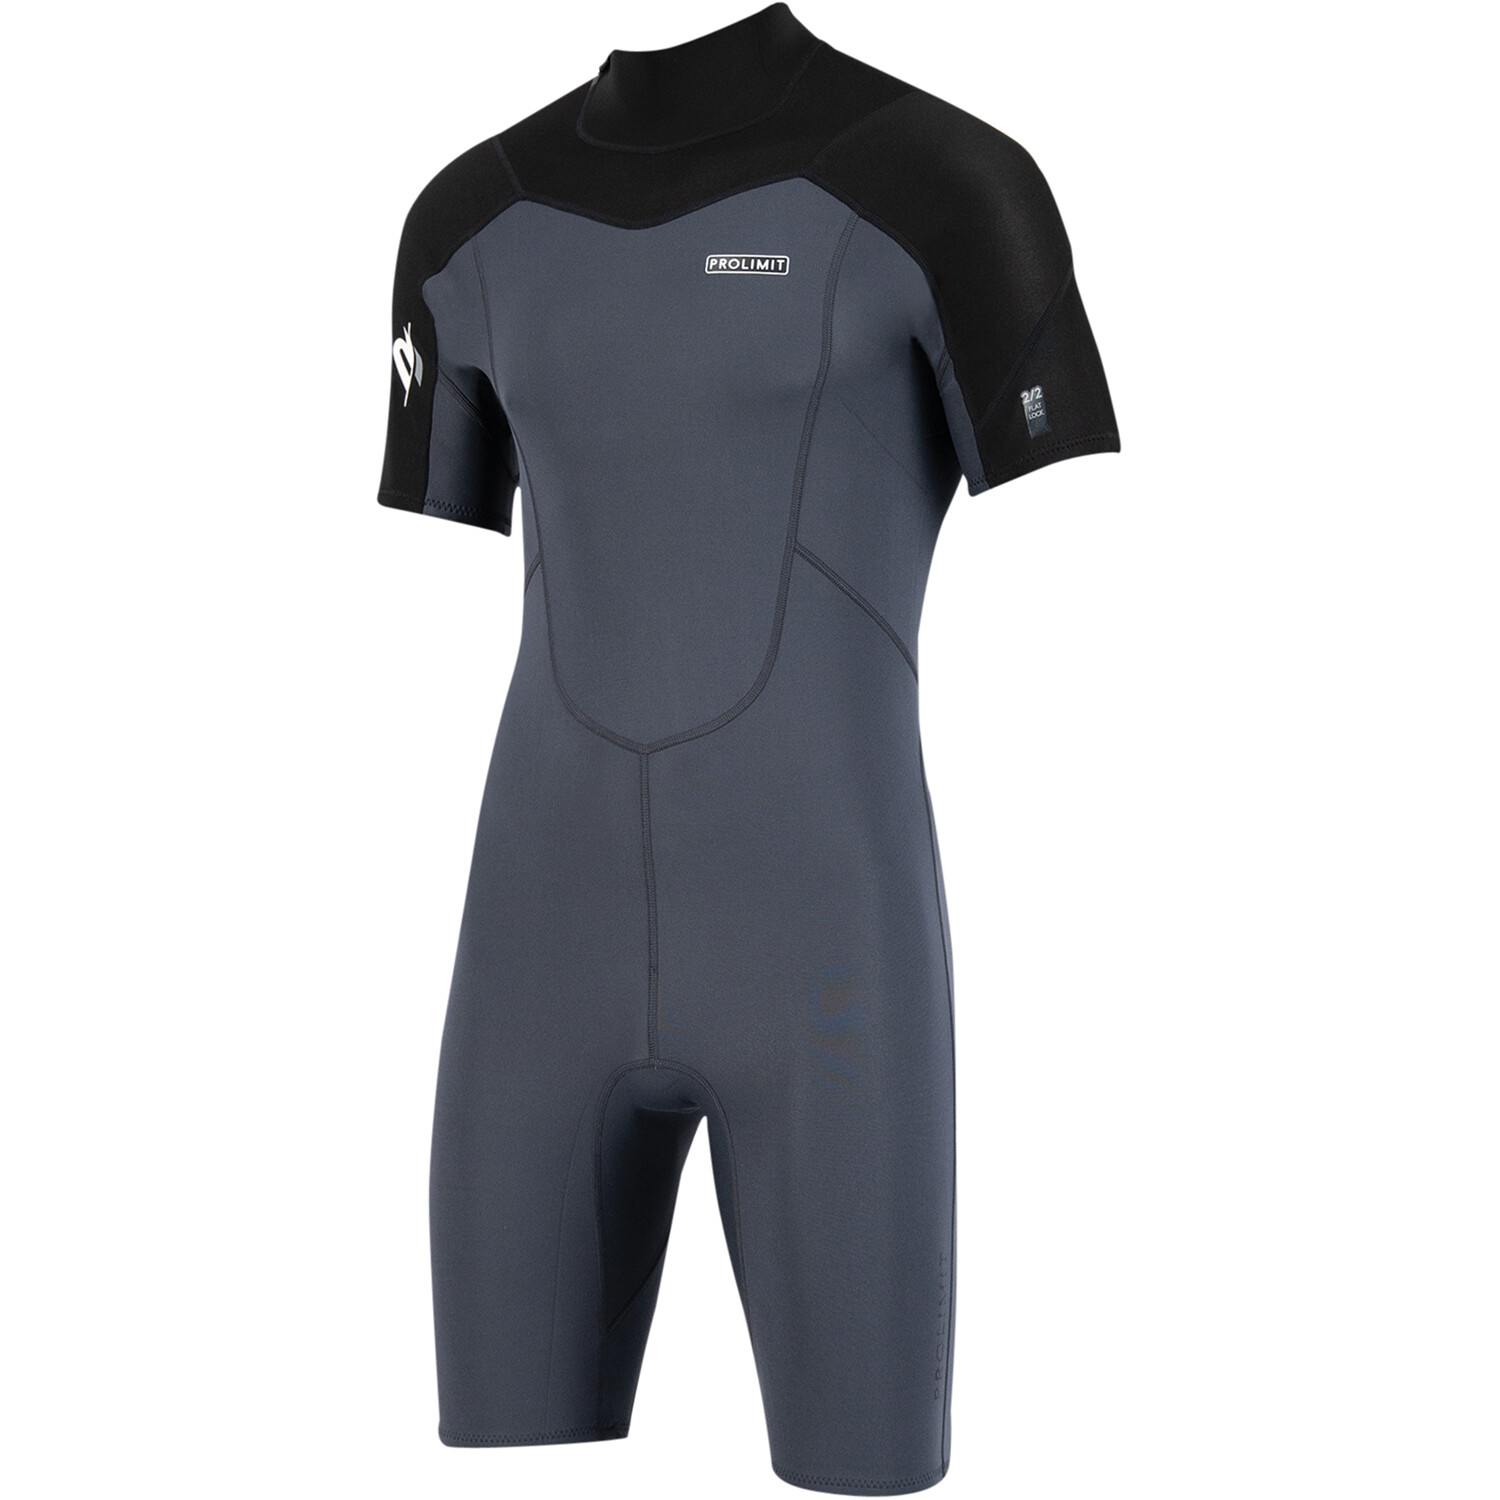 Prolimit Raider 2/2mm shorty backzip wetsuit grey / black